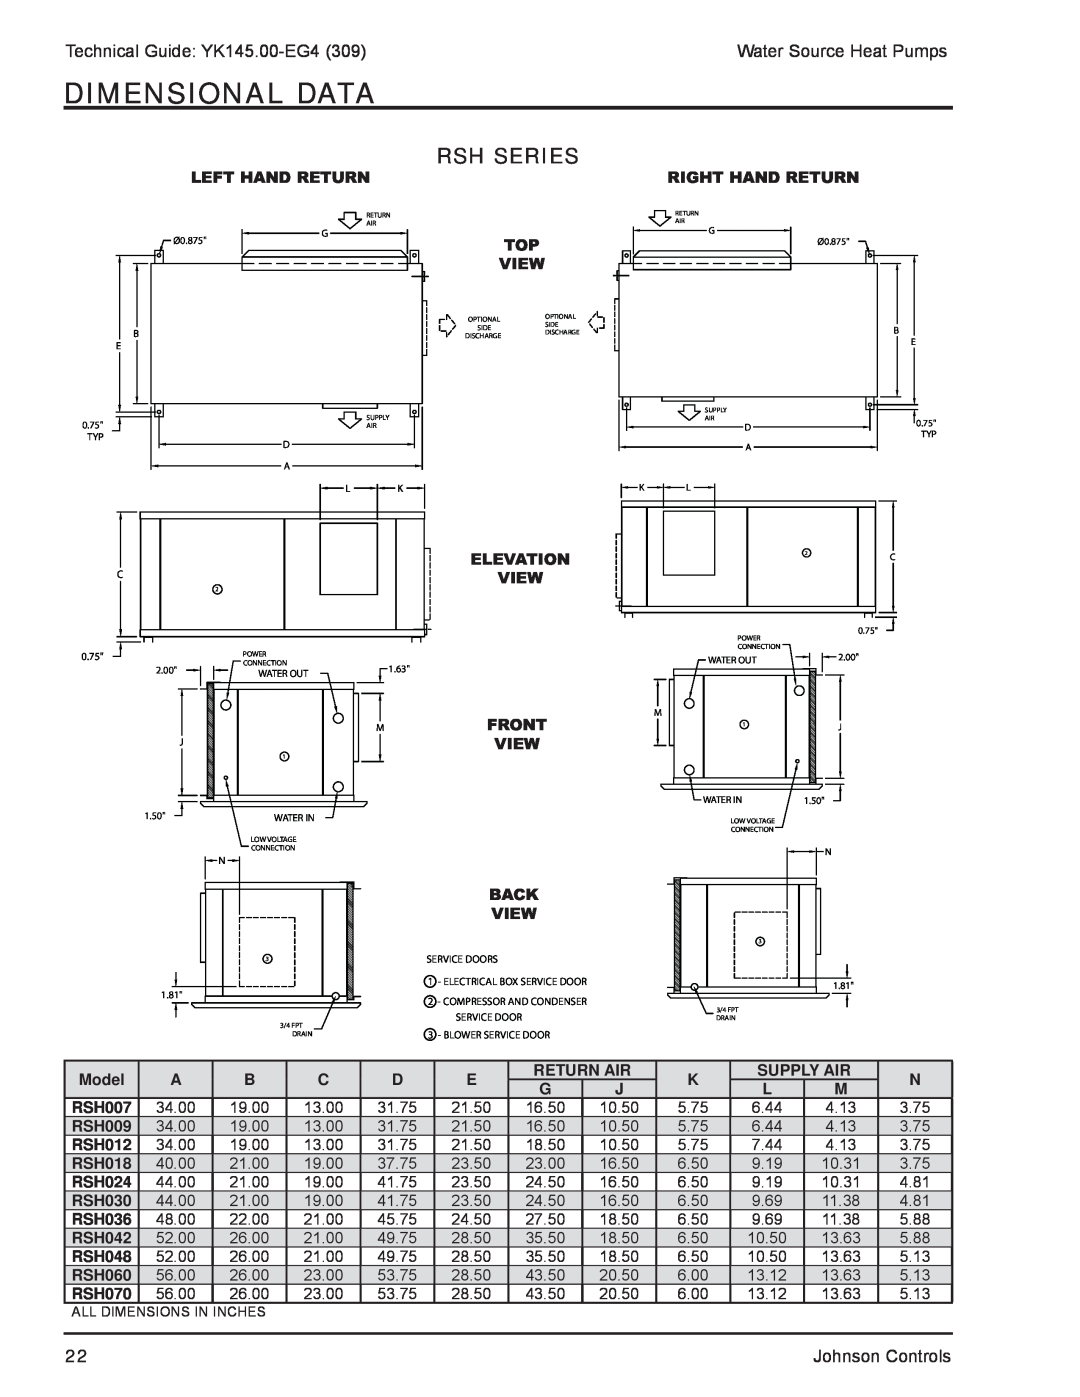 York YK145.00-EG4 manual Dimensional Data, Rsh Series, Left Hand Return, Right Hand Return, Front, View, Back 